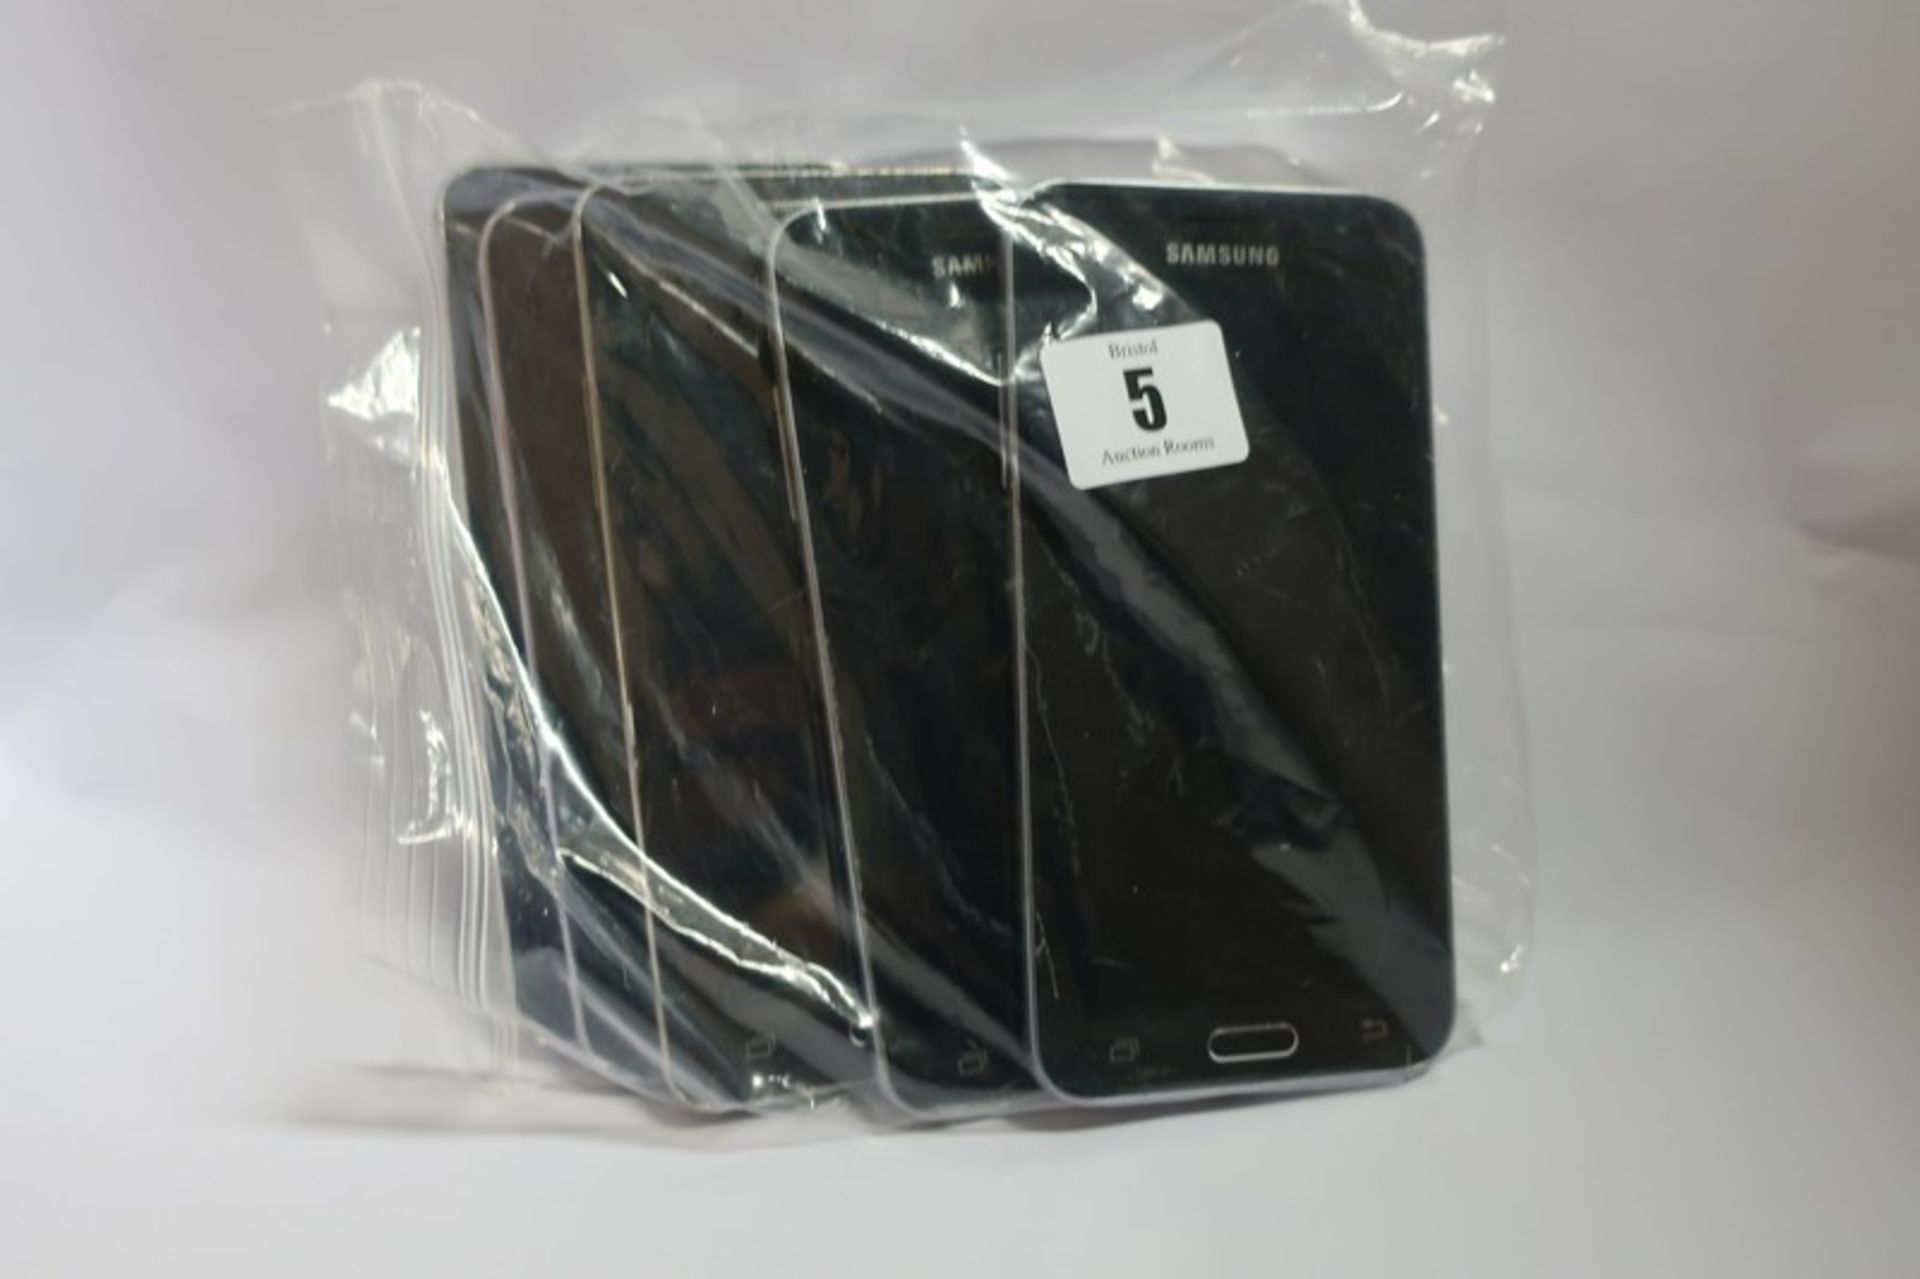 Two Samsung Galaxy J3 SM-J320FN (IMEI numbers: 355754089737574 / 352337086268943), a Samsung